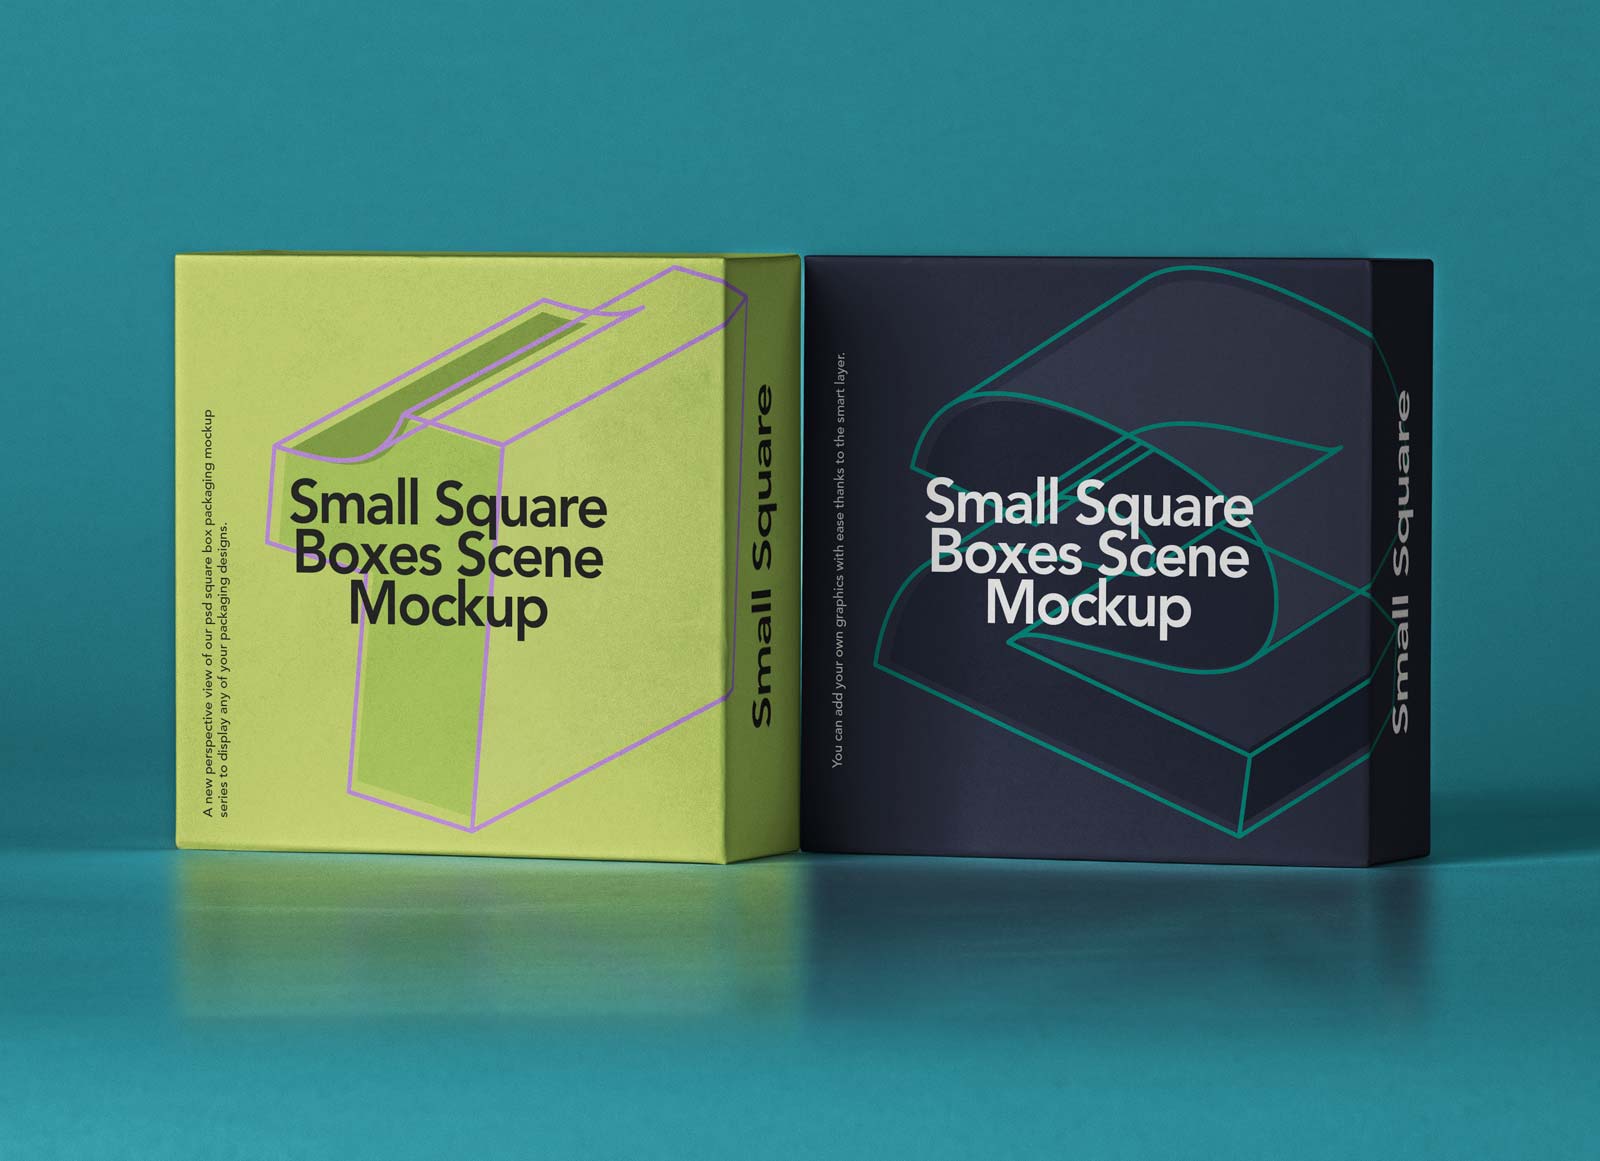 Download Free Small Square Boxes Packaging Mockup PSD - Good Mockups